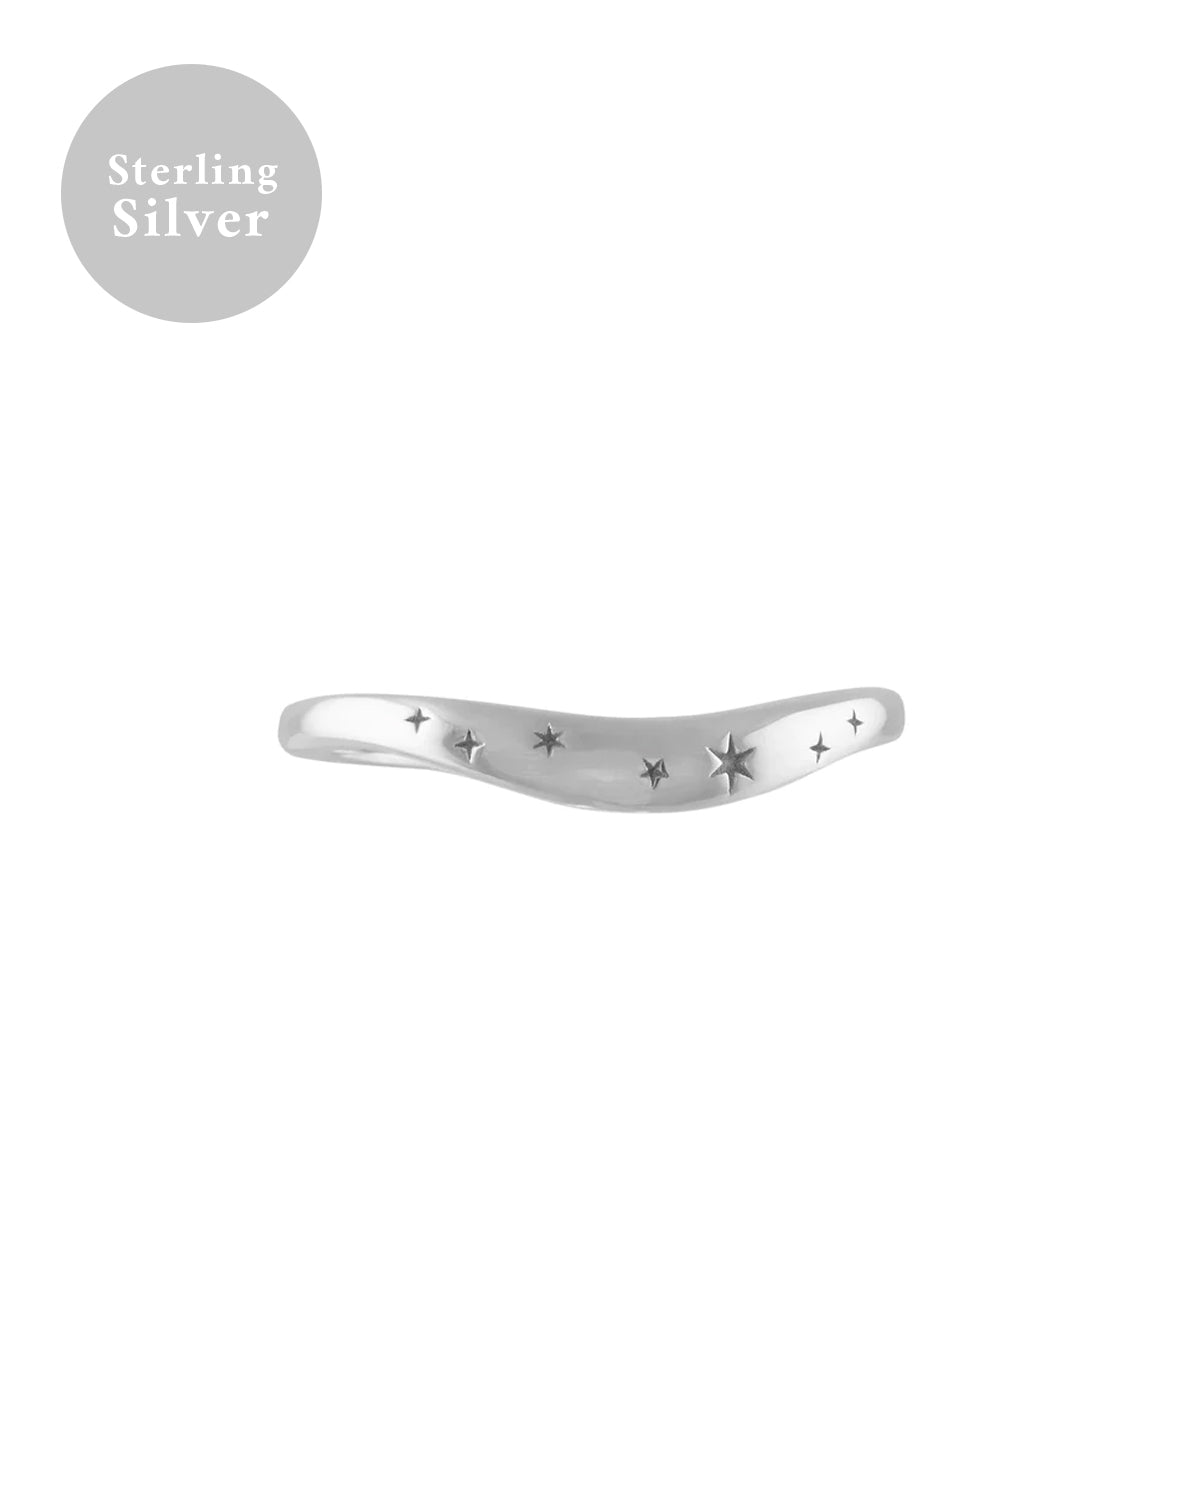 Evangeline Curved Ring - Sterling Silver